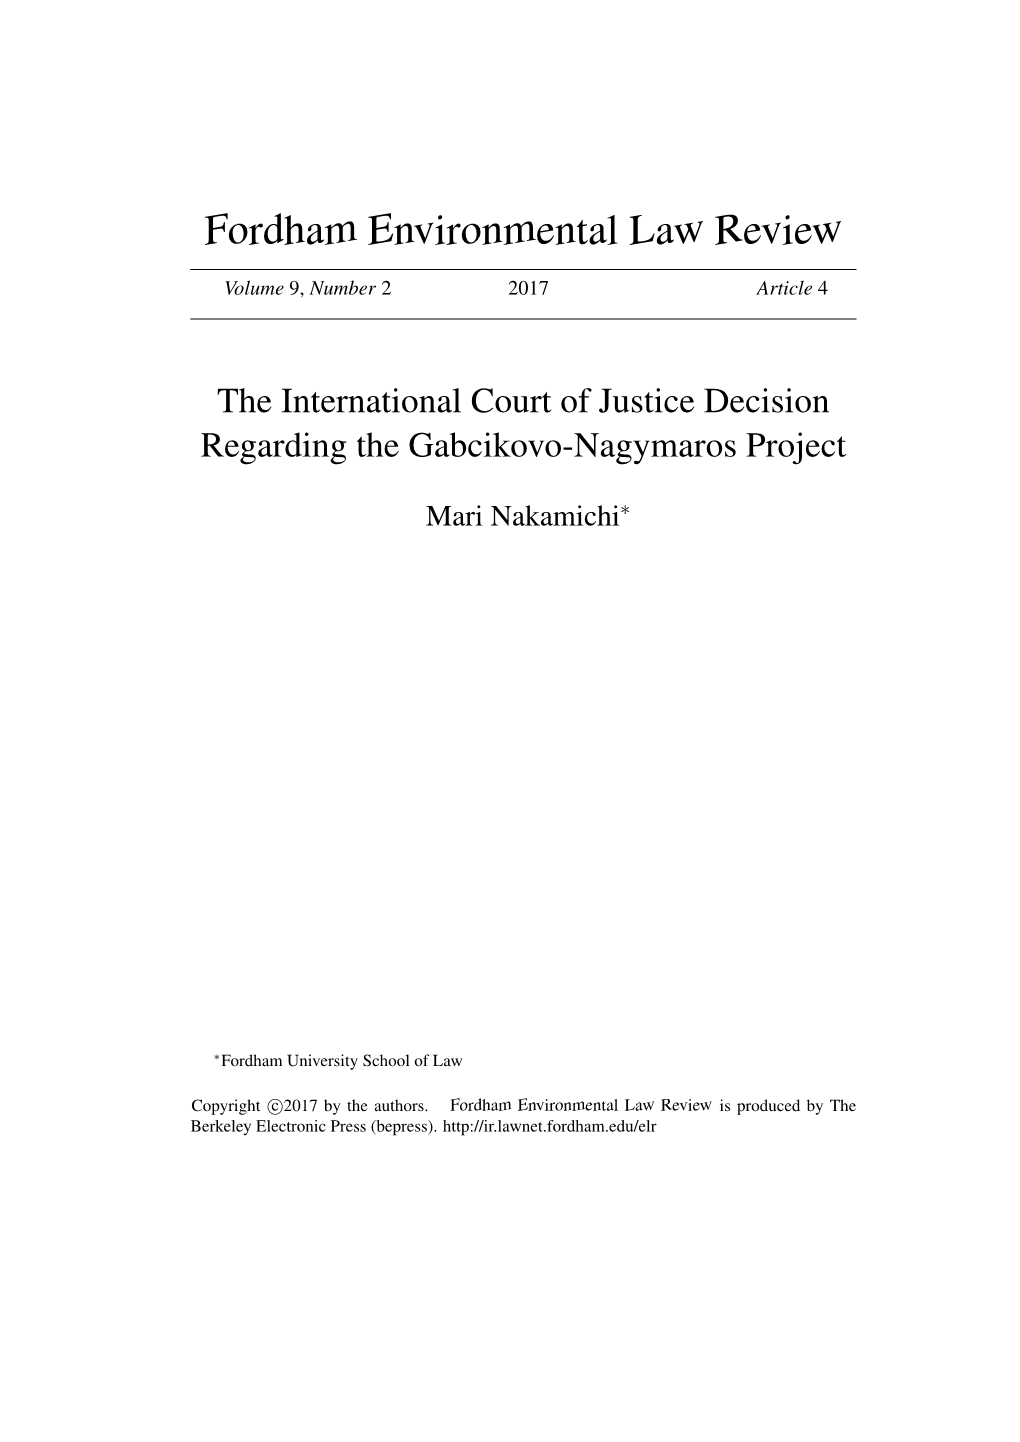 The International Court of Justice Decision Regarding the Gabcikovo-Nagymaros Project